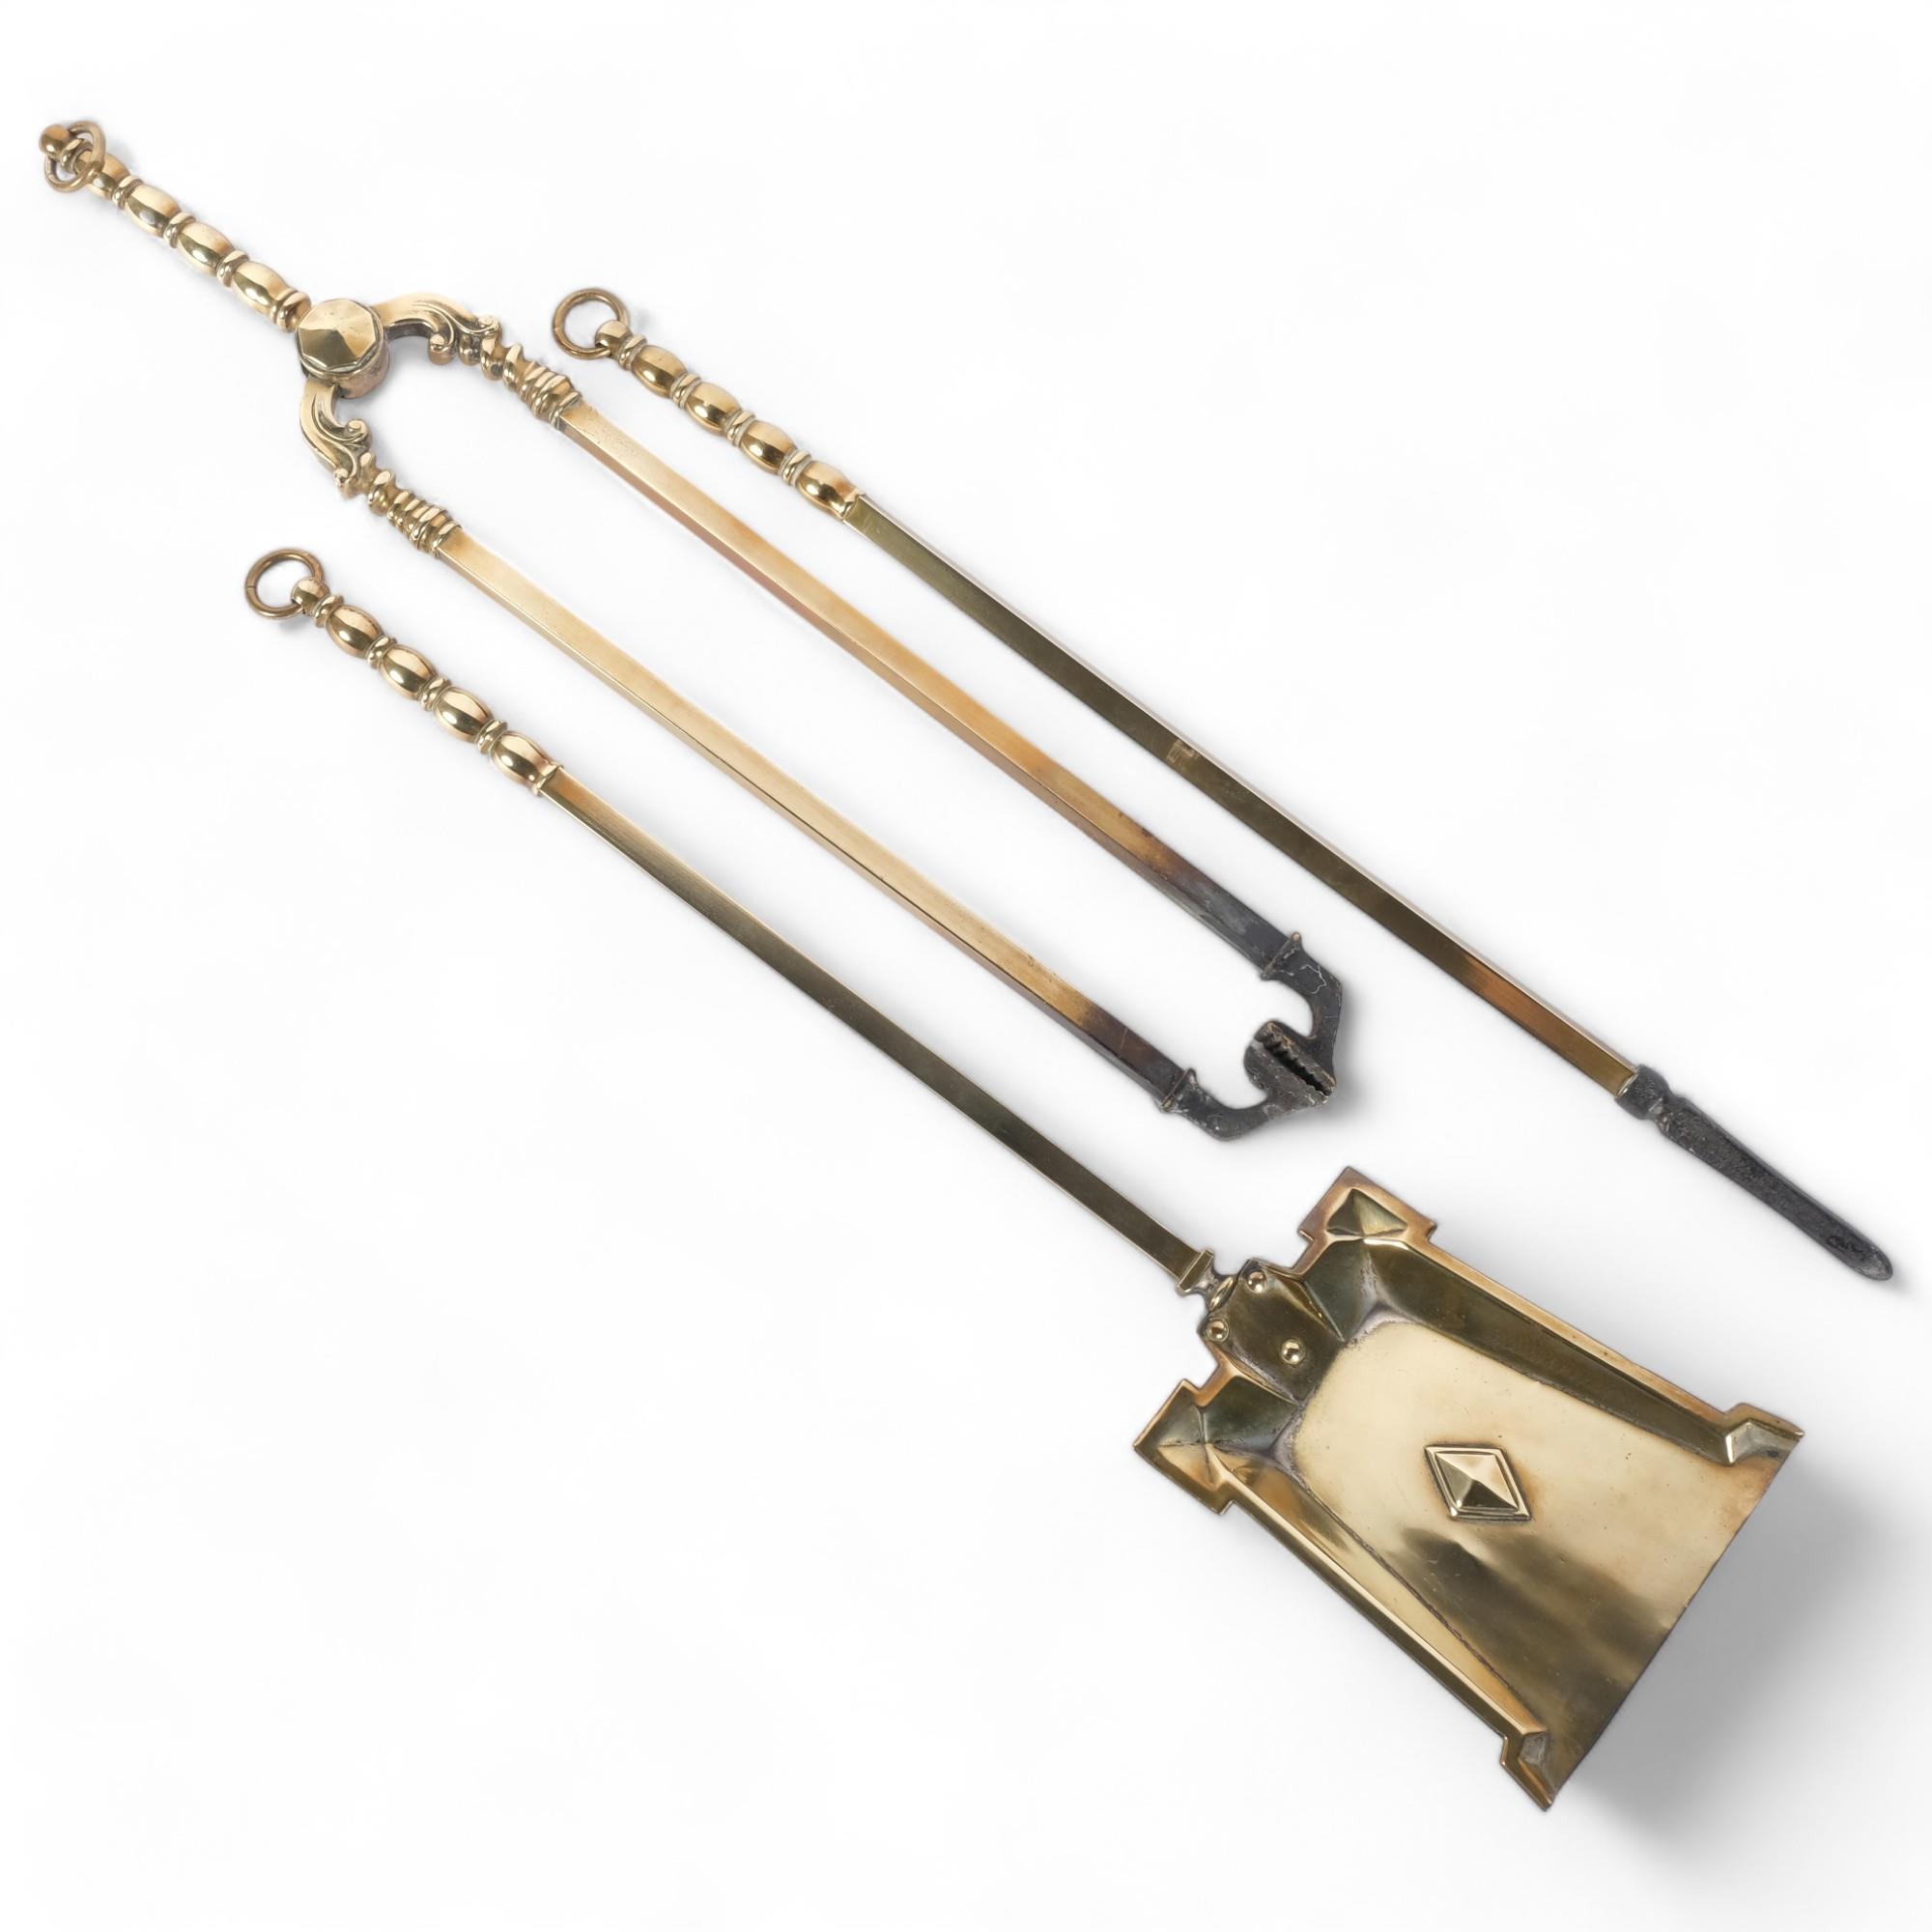 A 3-piece Arts and Crafts brass companion set, longest piece 57cm